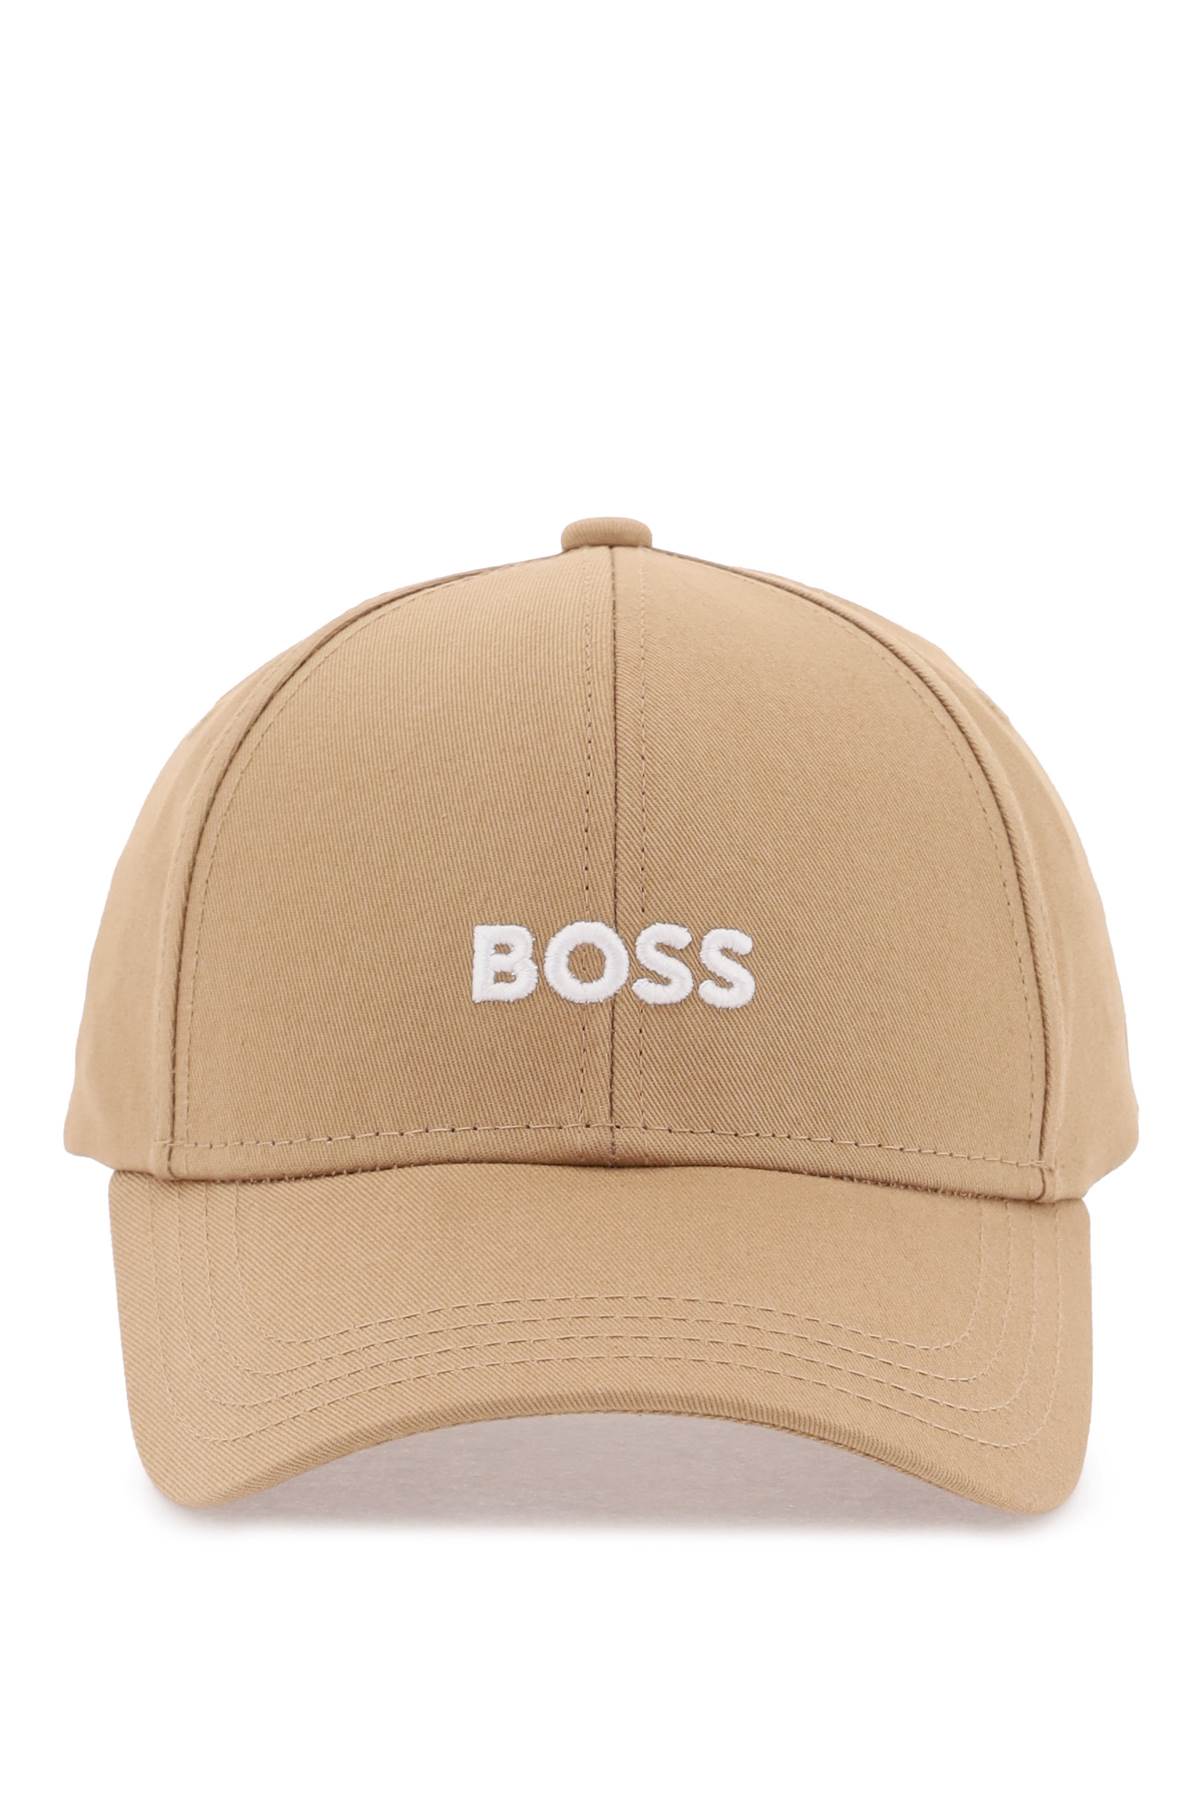 Hugo Boss Baseball Cap With Embroidered Logo In Medium Beige (beige)